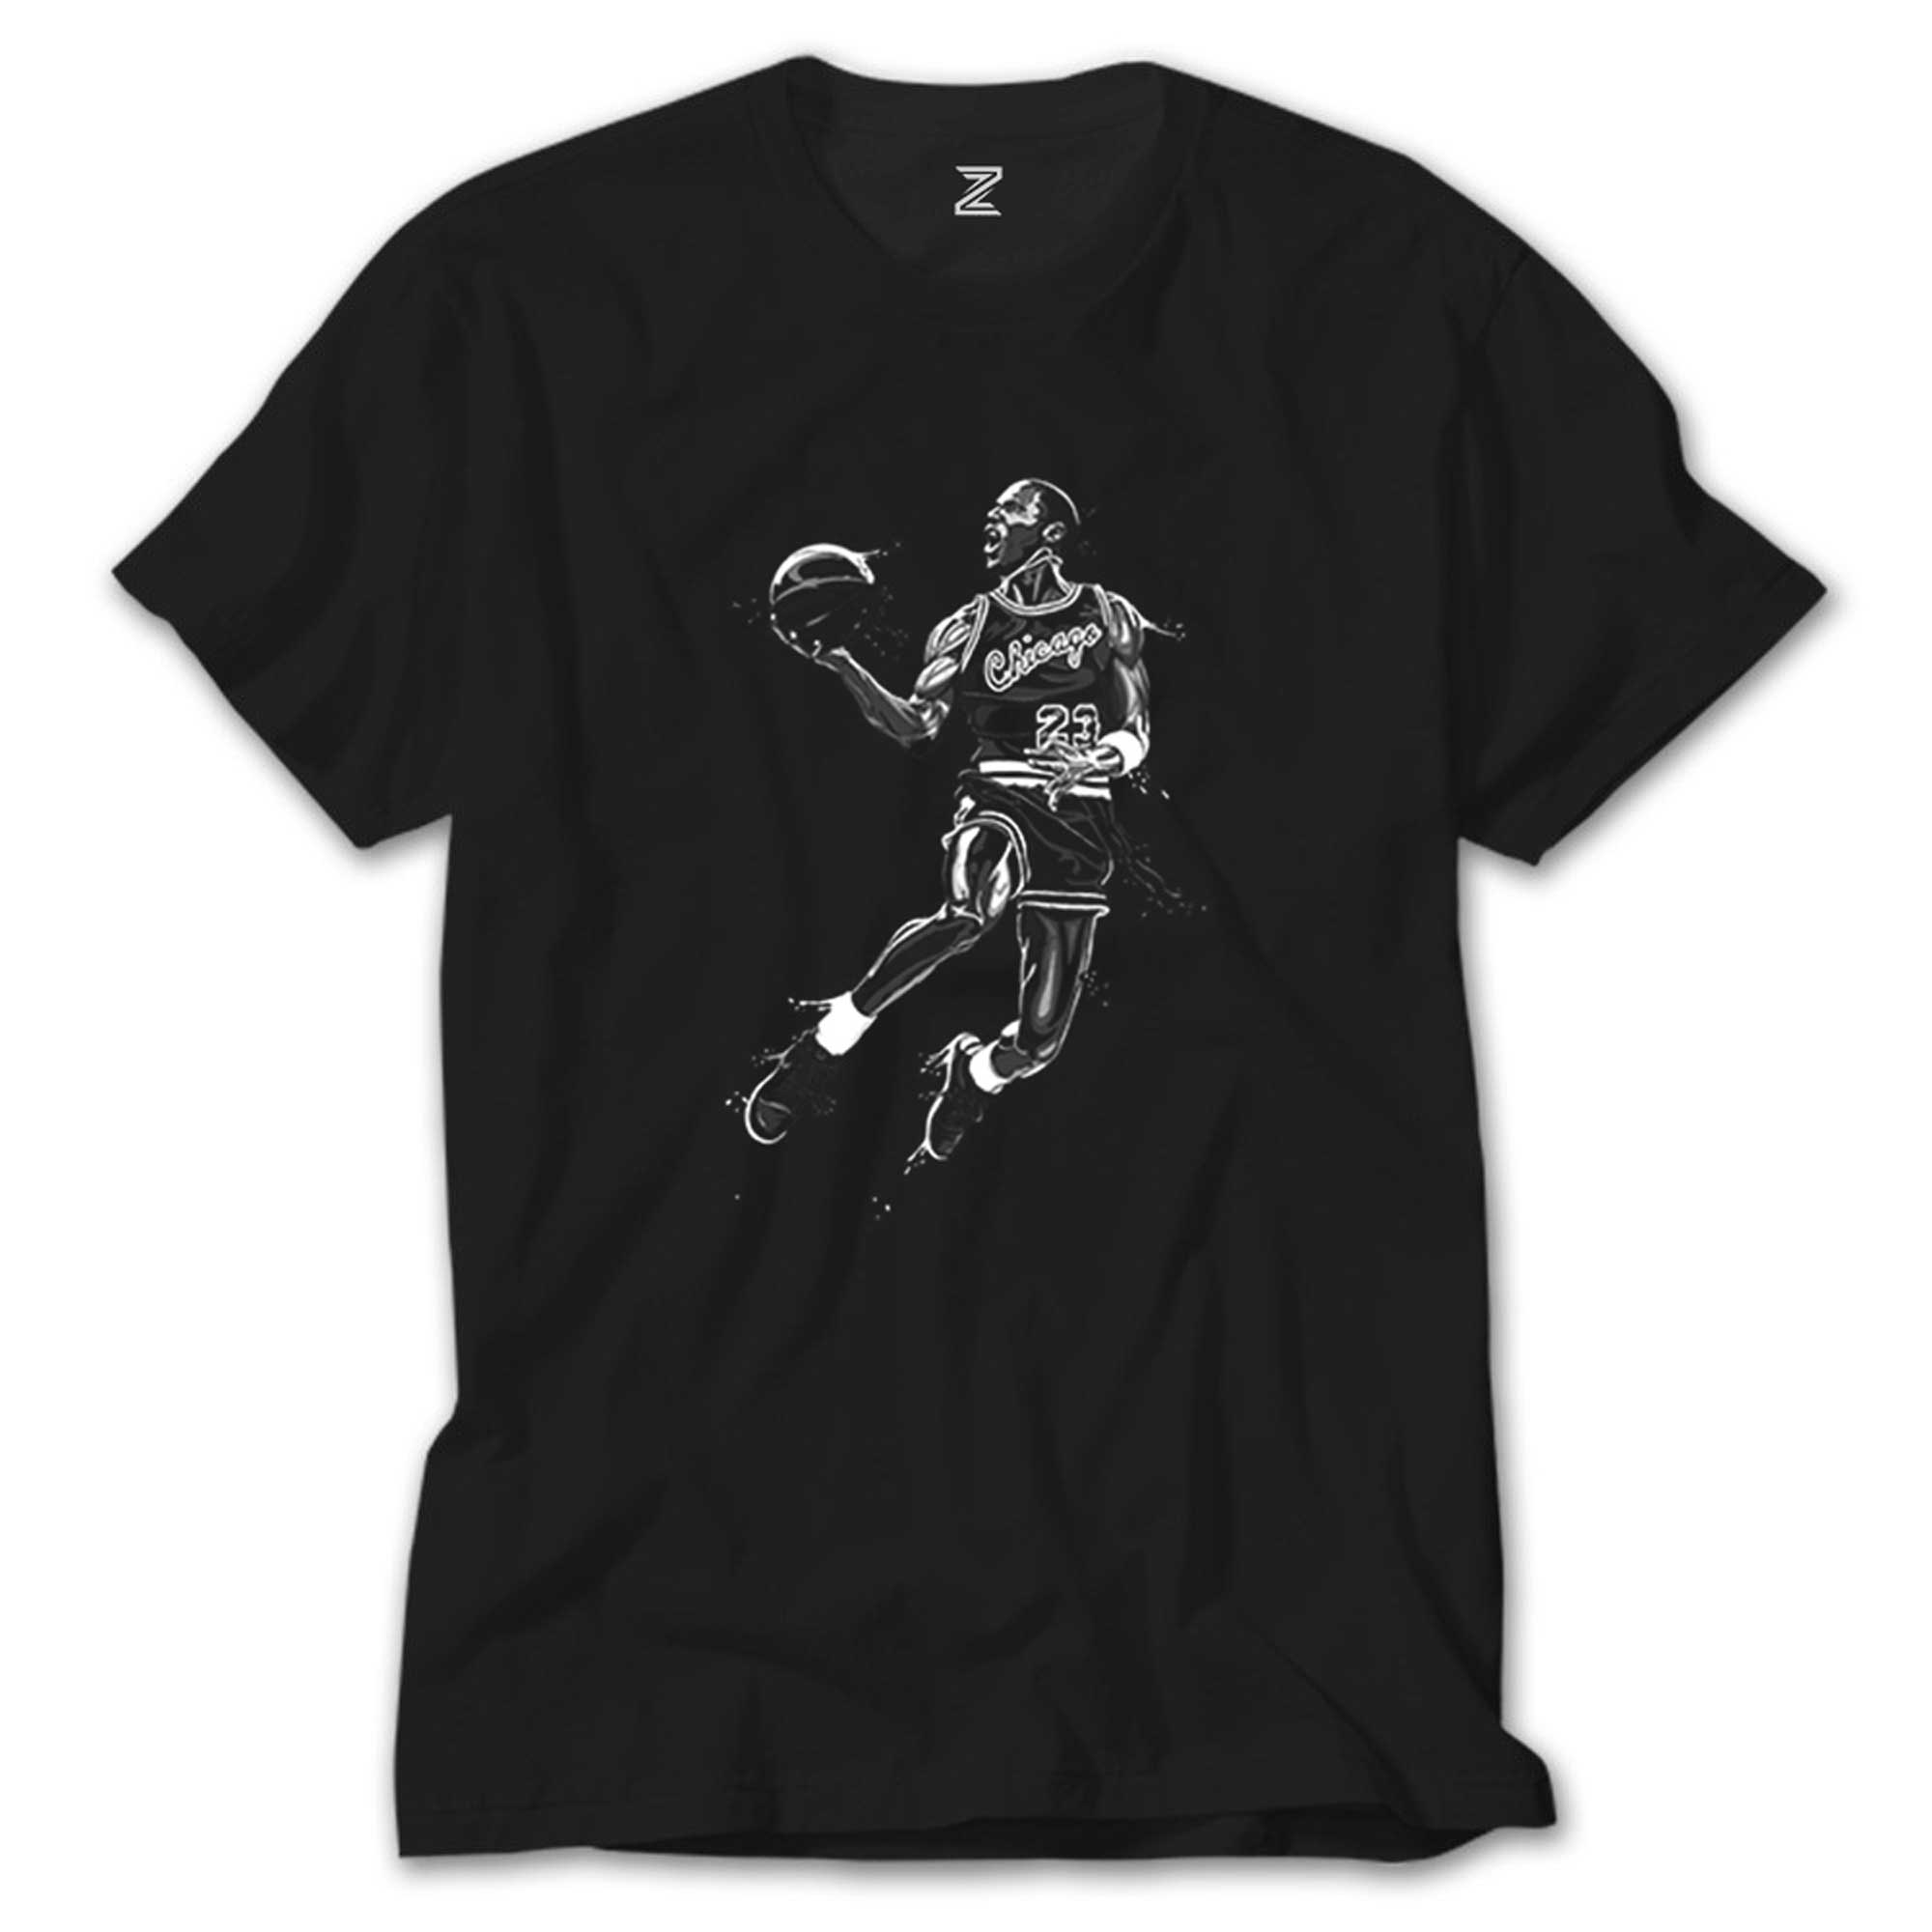 Michael Jordan Black Siyah Tişört